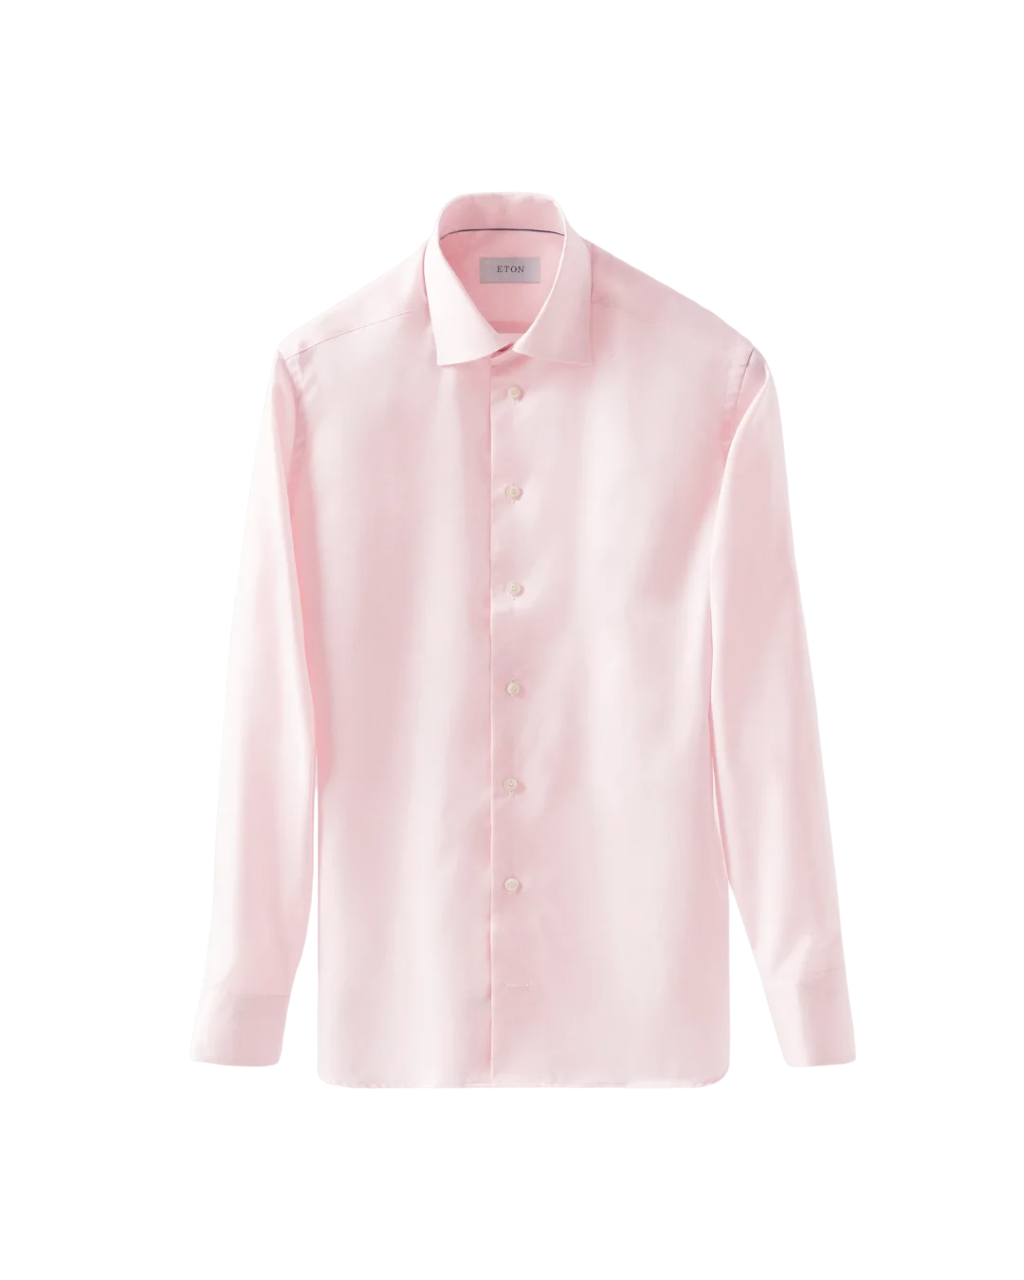 Eton Signature Twill Dress Shirt in Pink